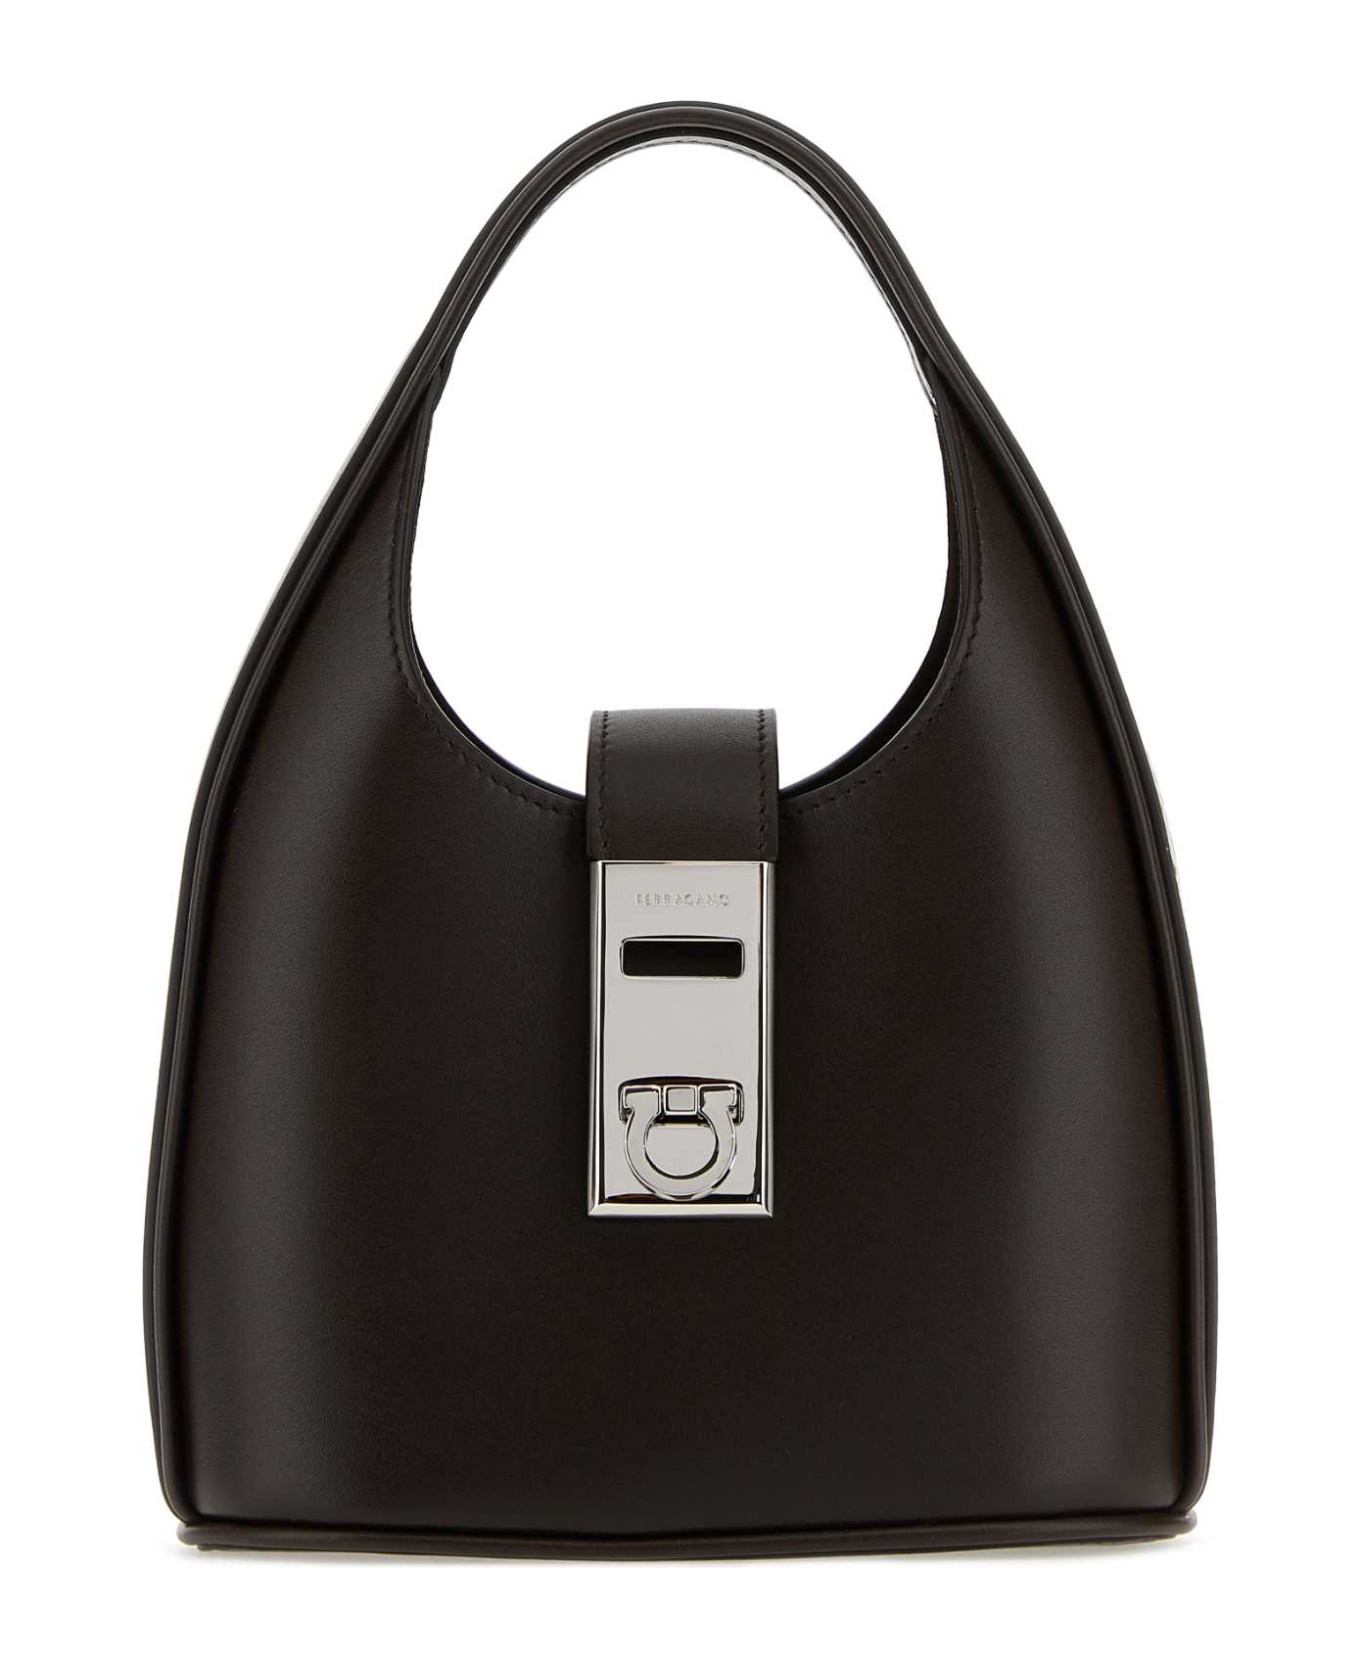 Ferragamo Dark Brown Leather Handbag - BROWN